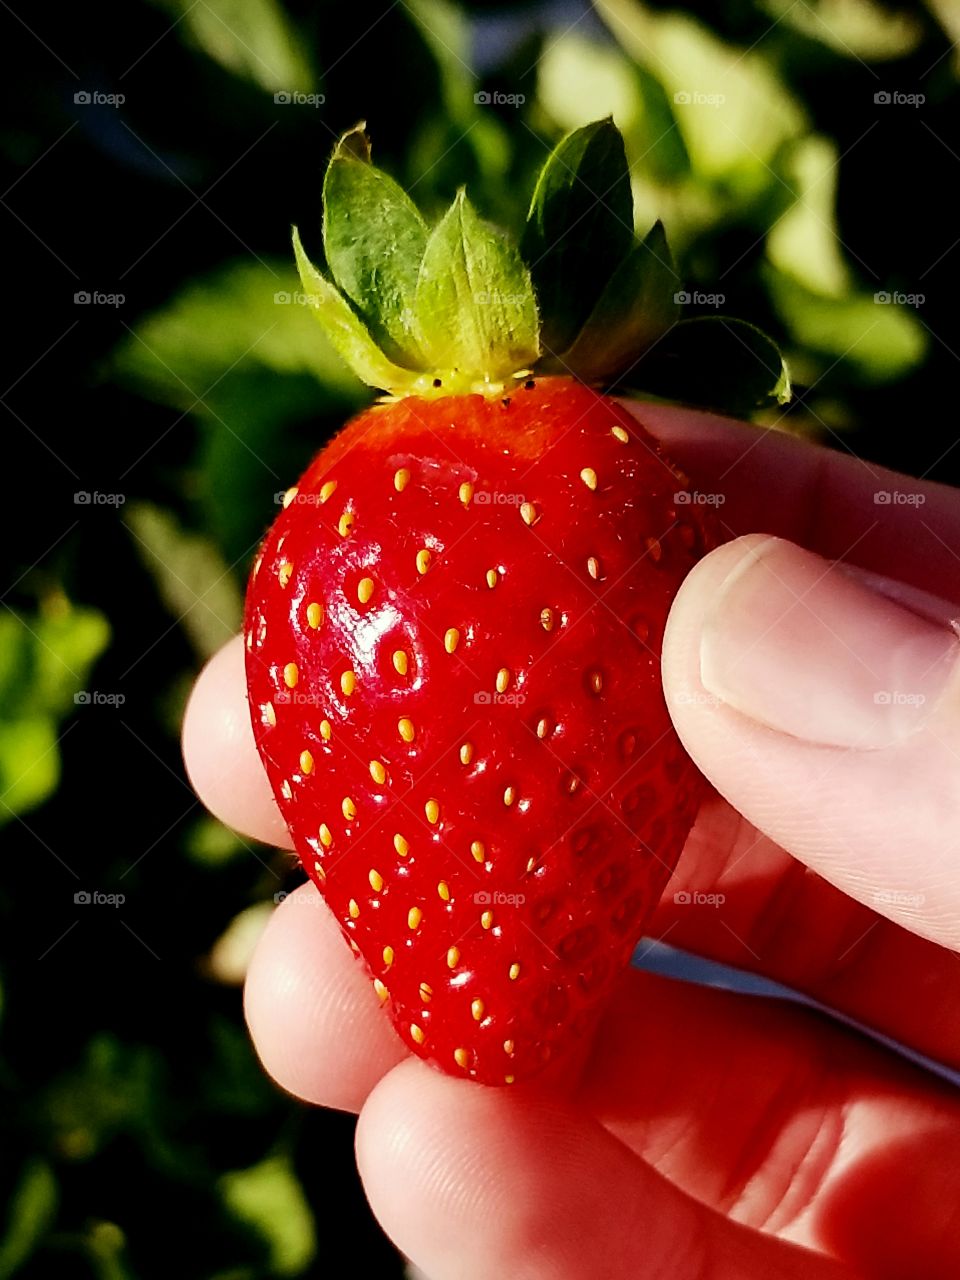 Big red juicy strawberry freshly picked